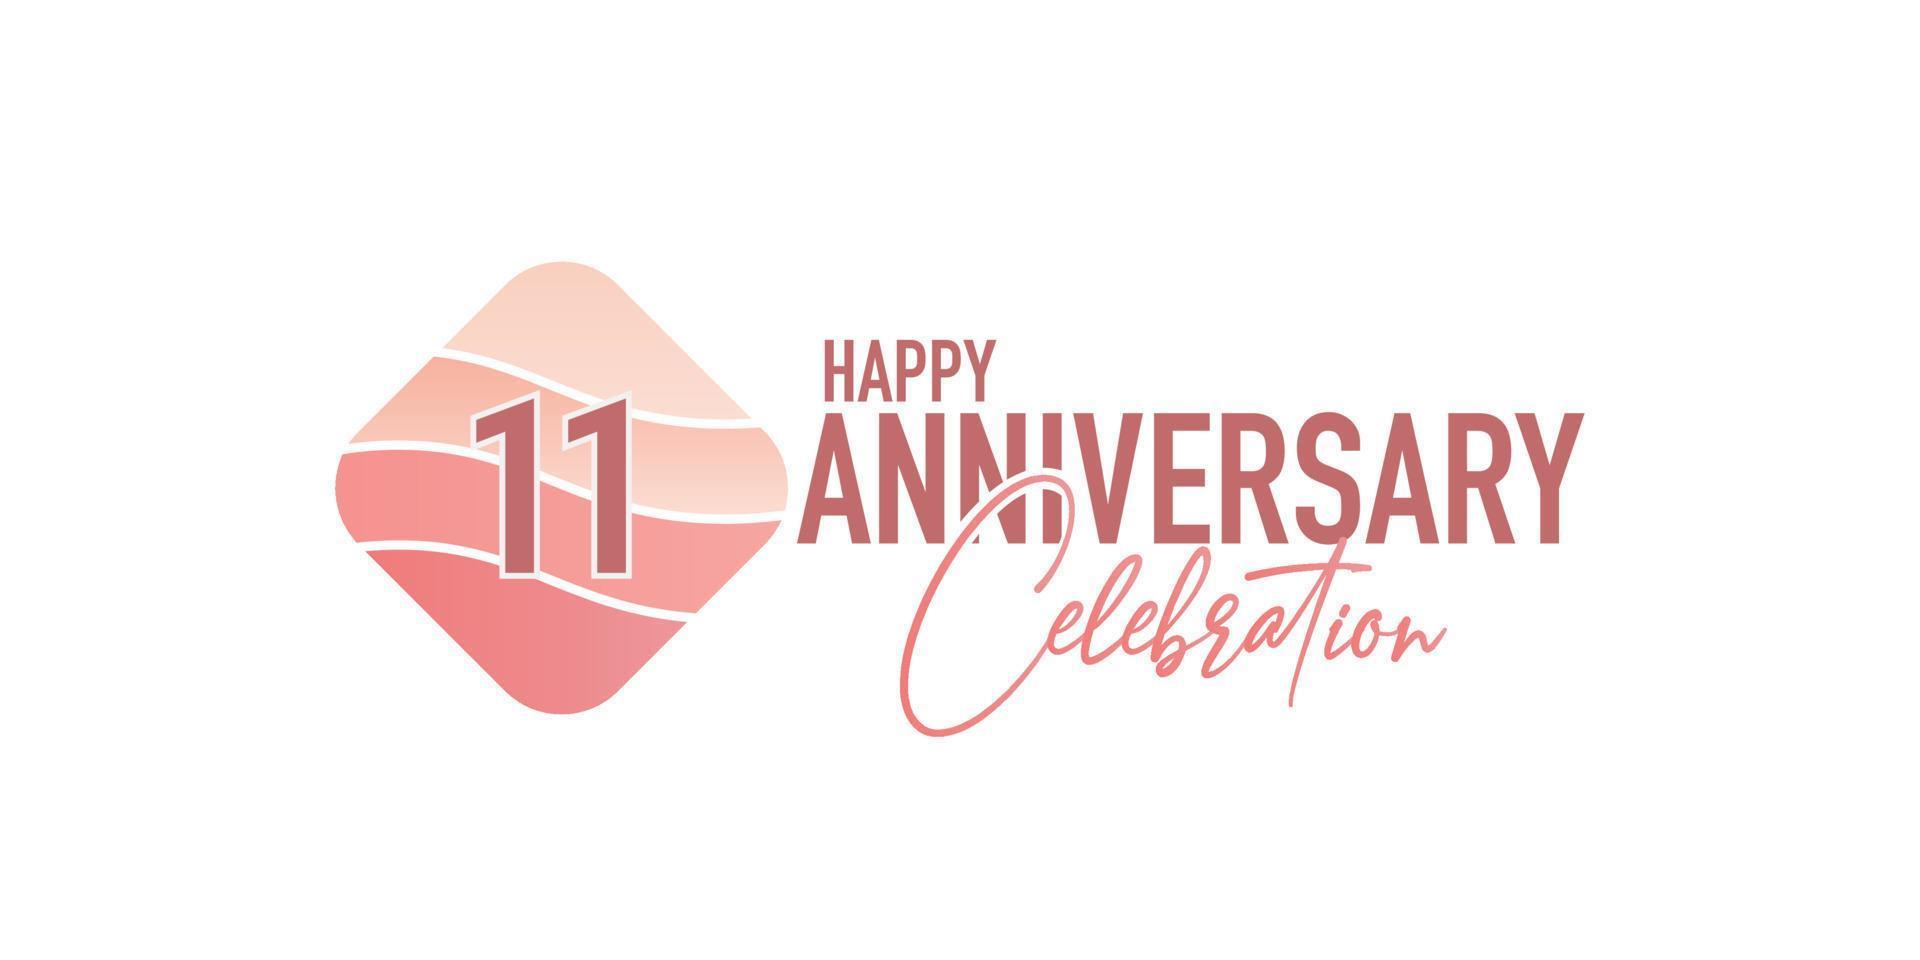 11 years anniversary logo vector illustration design celebration with pink geometric design